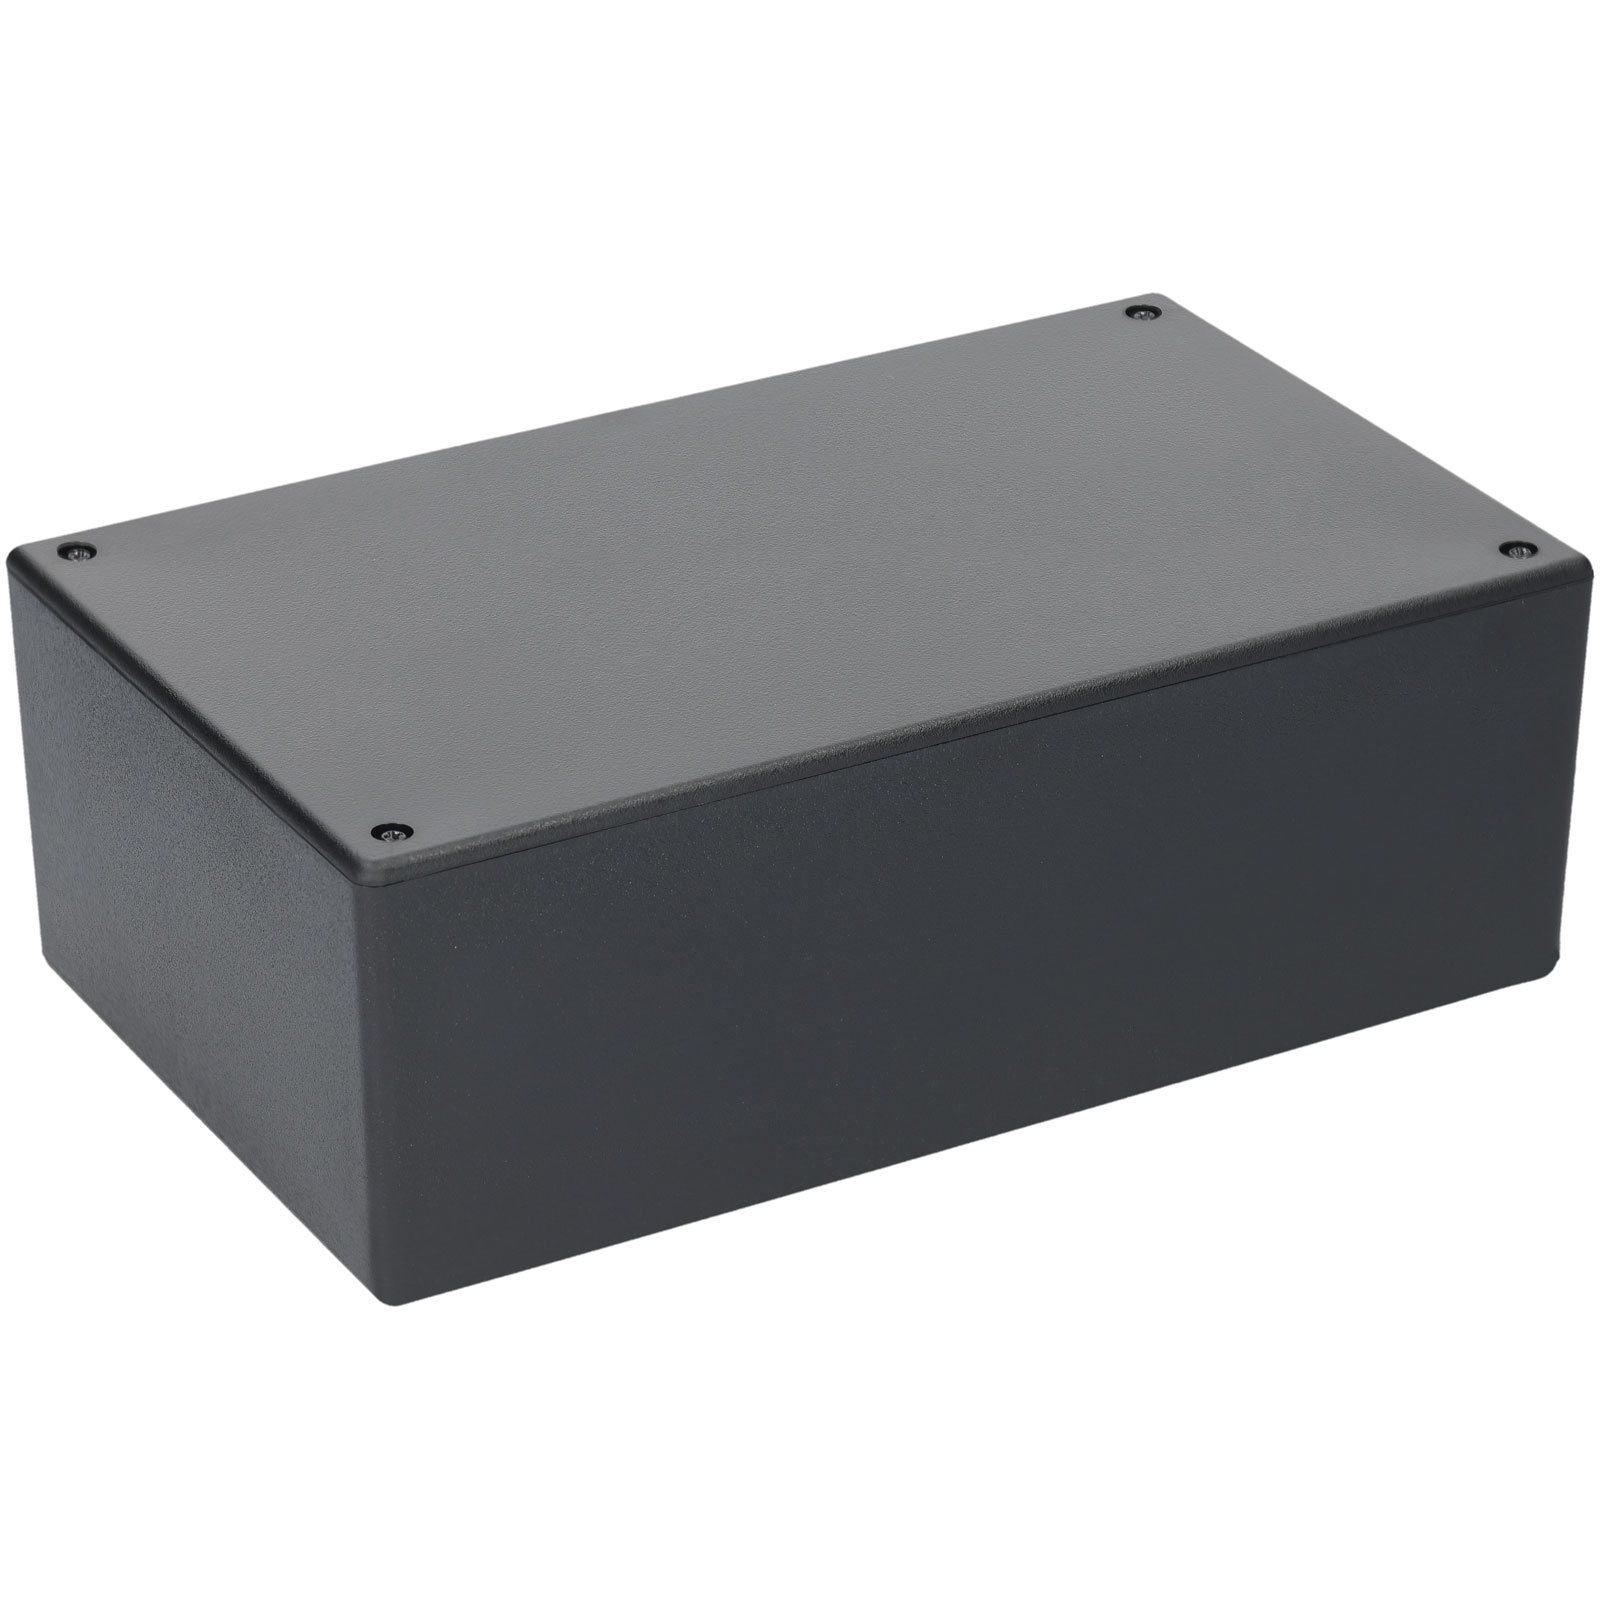 R-TECH 301791 ABS Utility Box Black 189x113x66.6mm